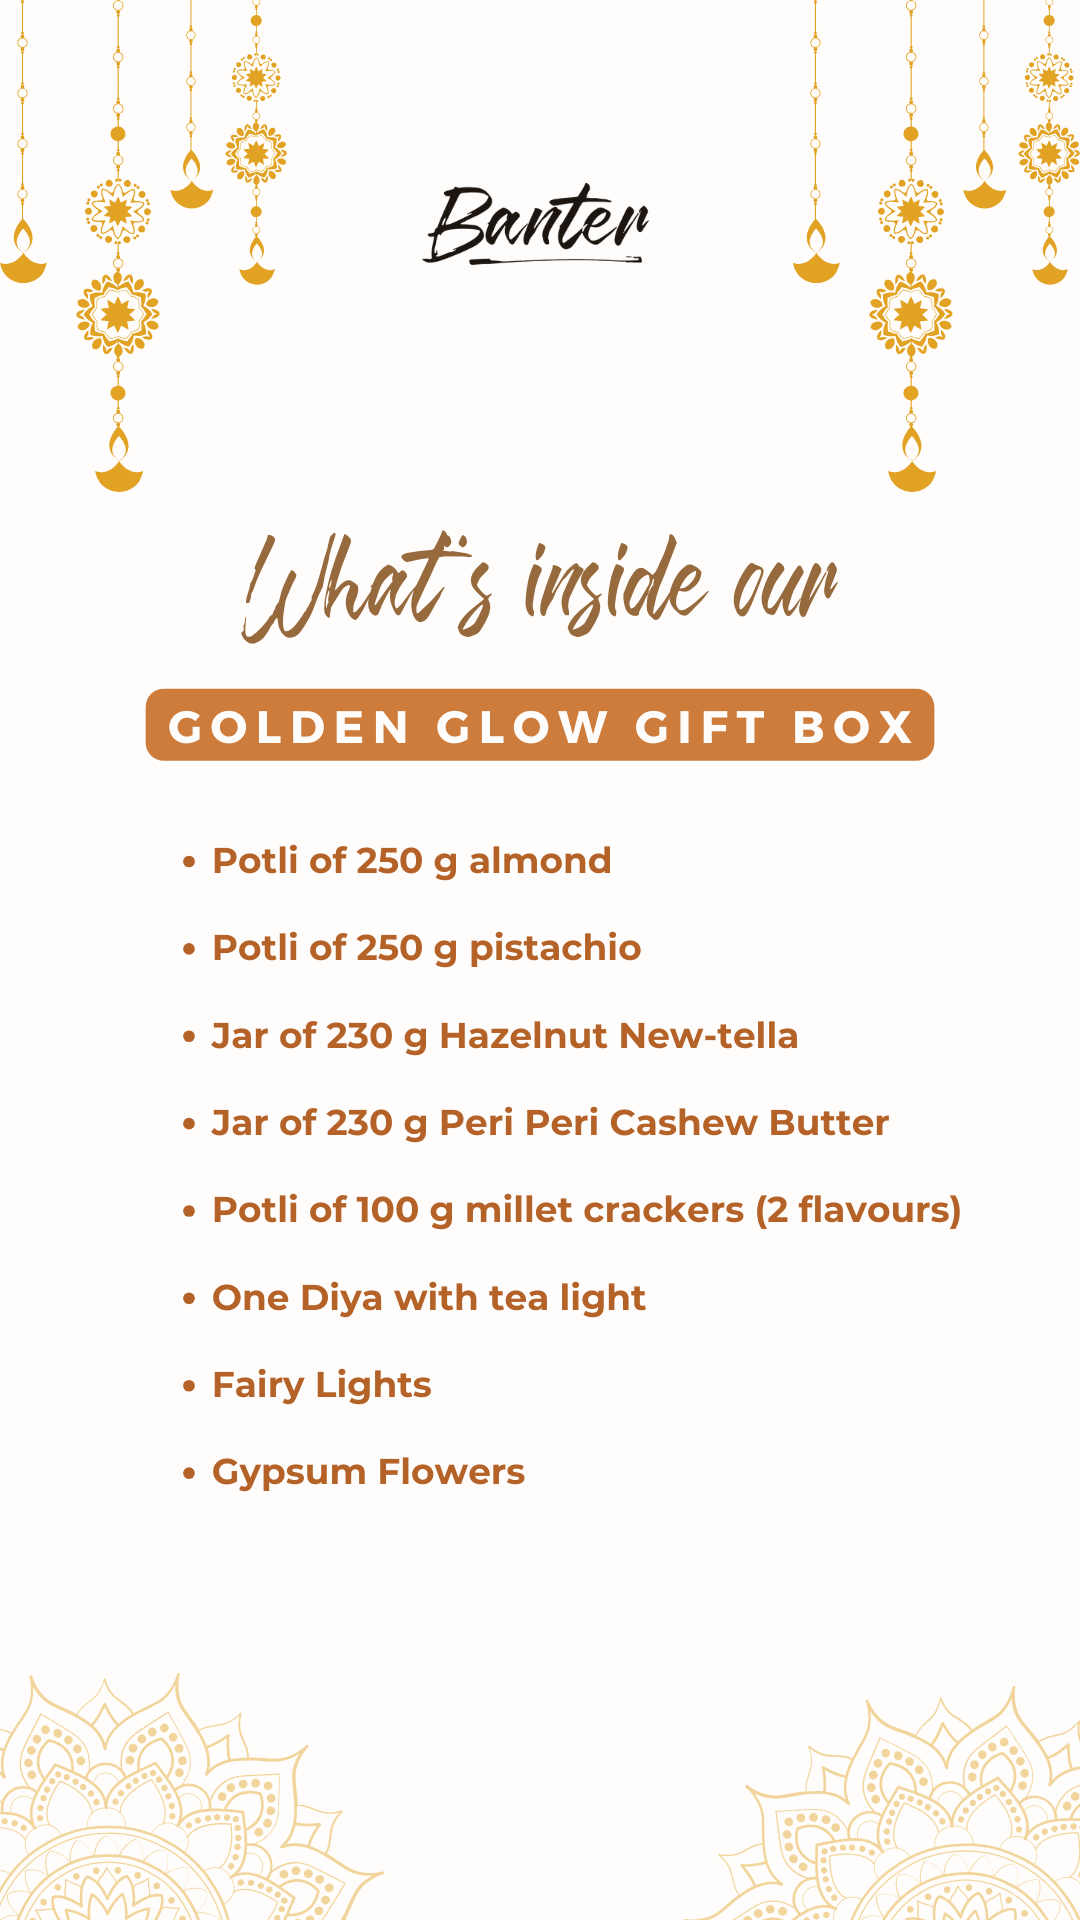 Golden Glow Gift Box